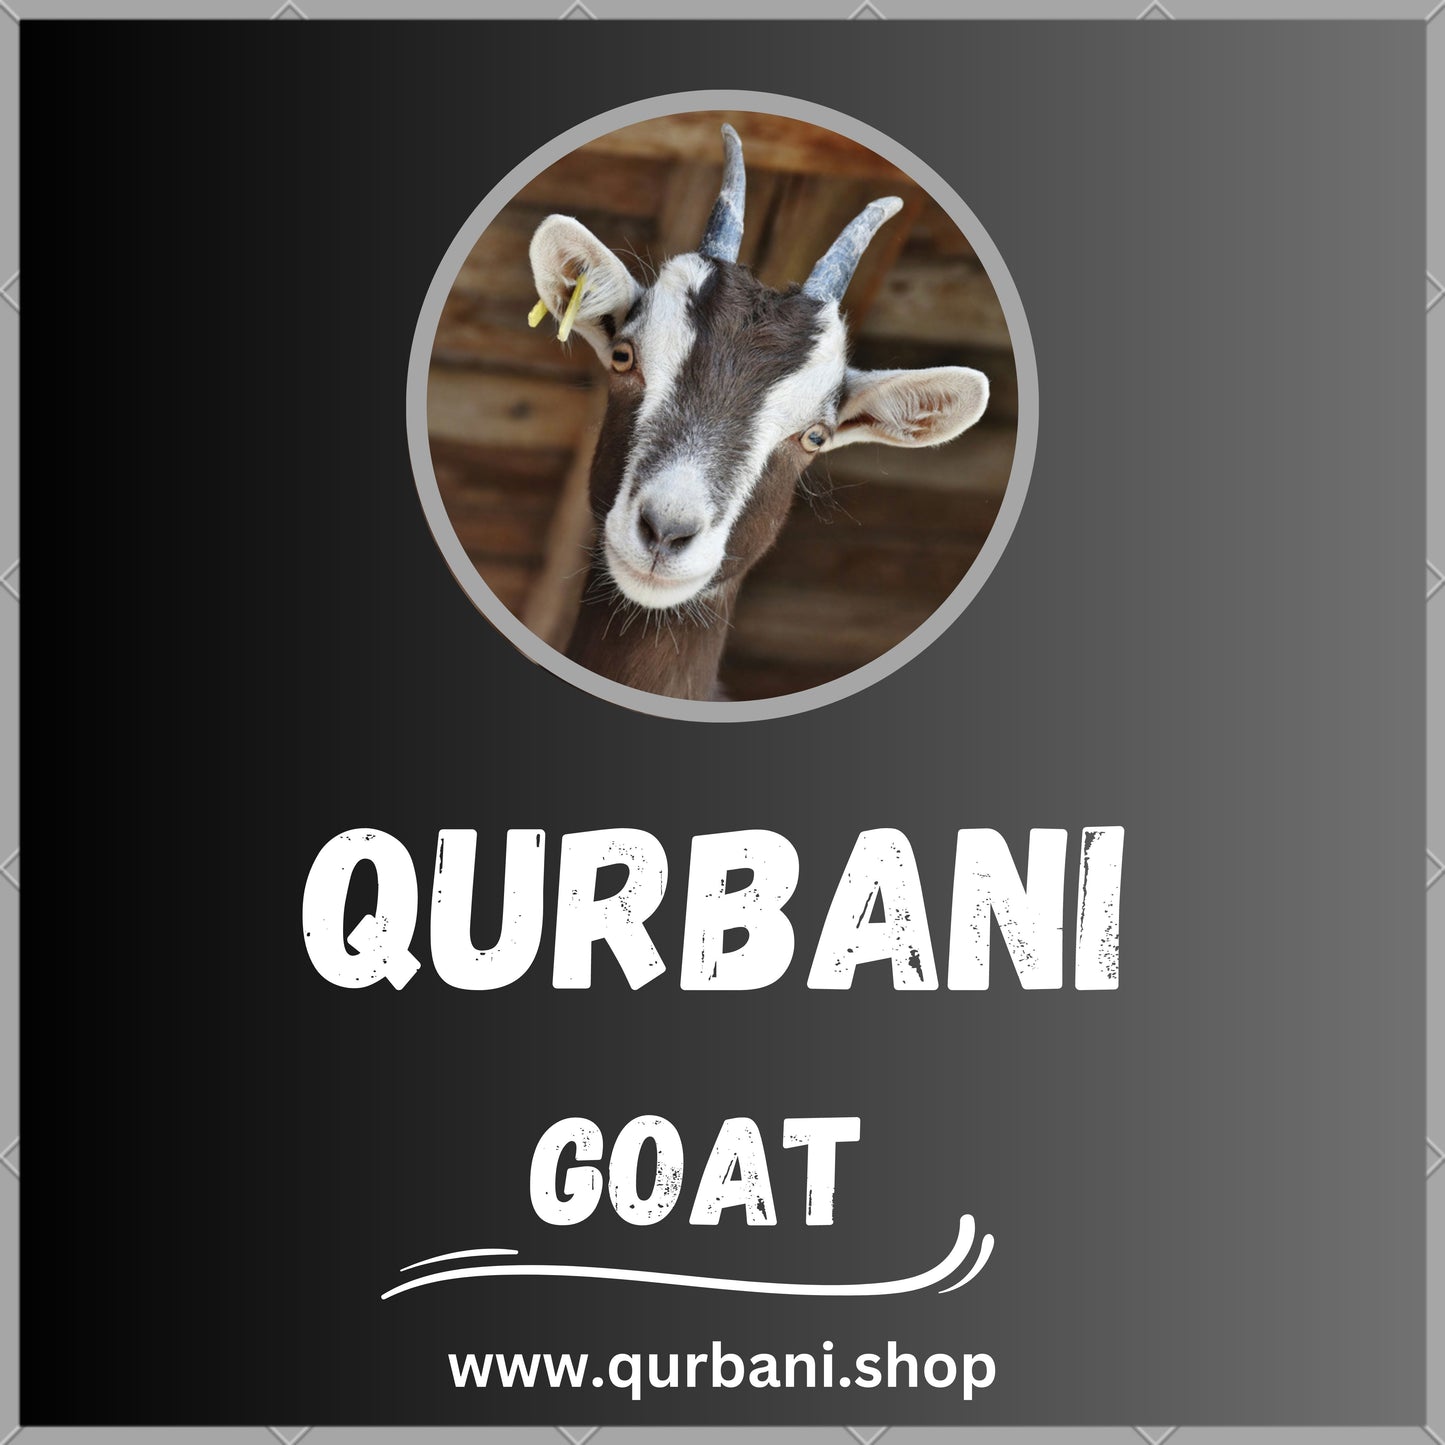 Perform Qurbani in Richardson - Book Your Eid Sacrifice